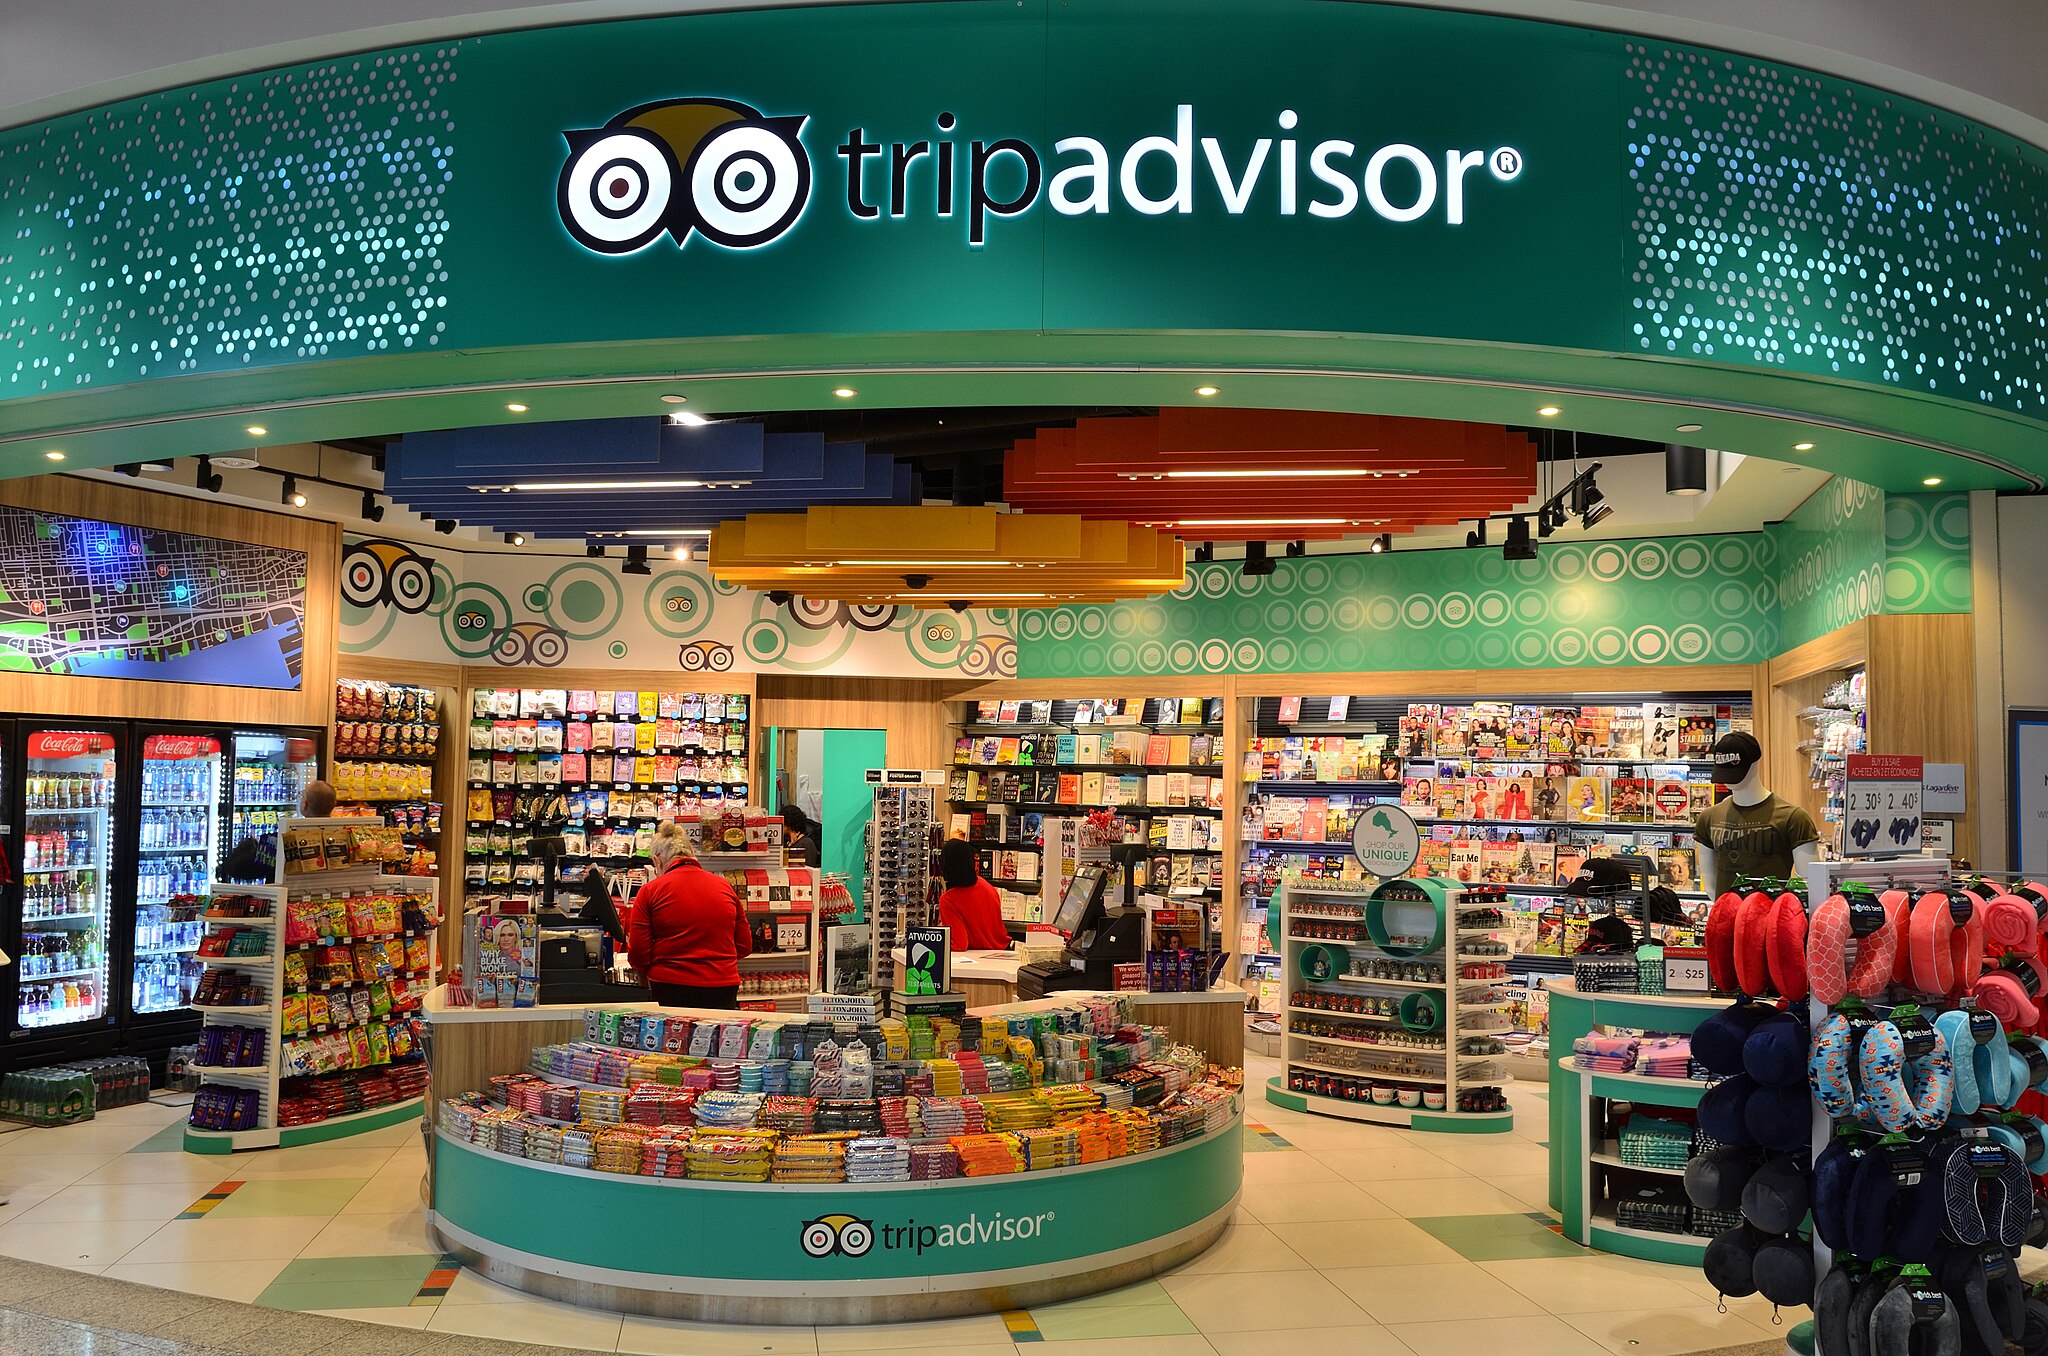 A Tripadvisor store as seen in Toronto Airport in November 2019. Source: Raysonho/Wikimedia https://commons.wikimedia.org/wiki/File:TripAdvisorTorontoAirportStore2.jpg